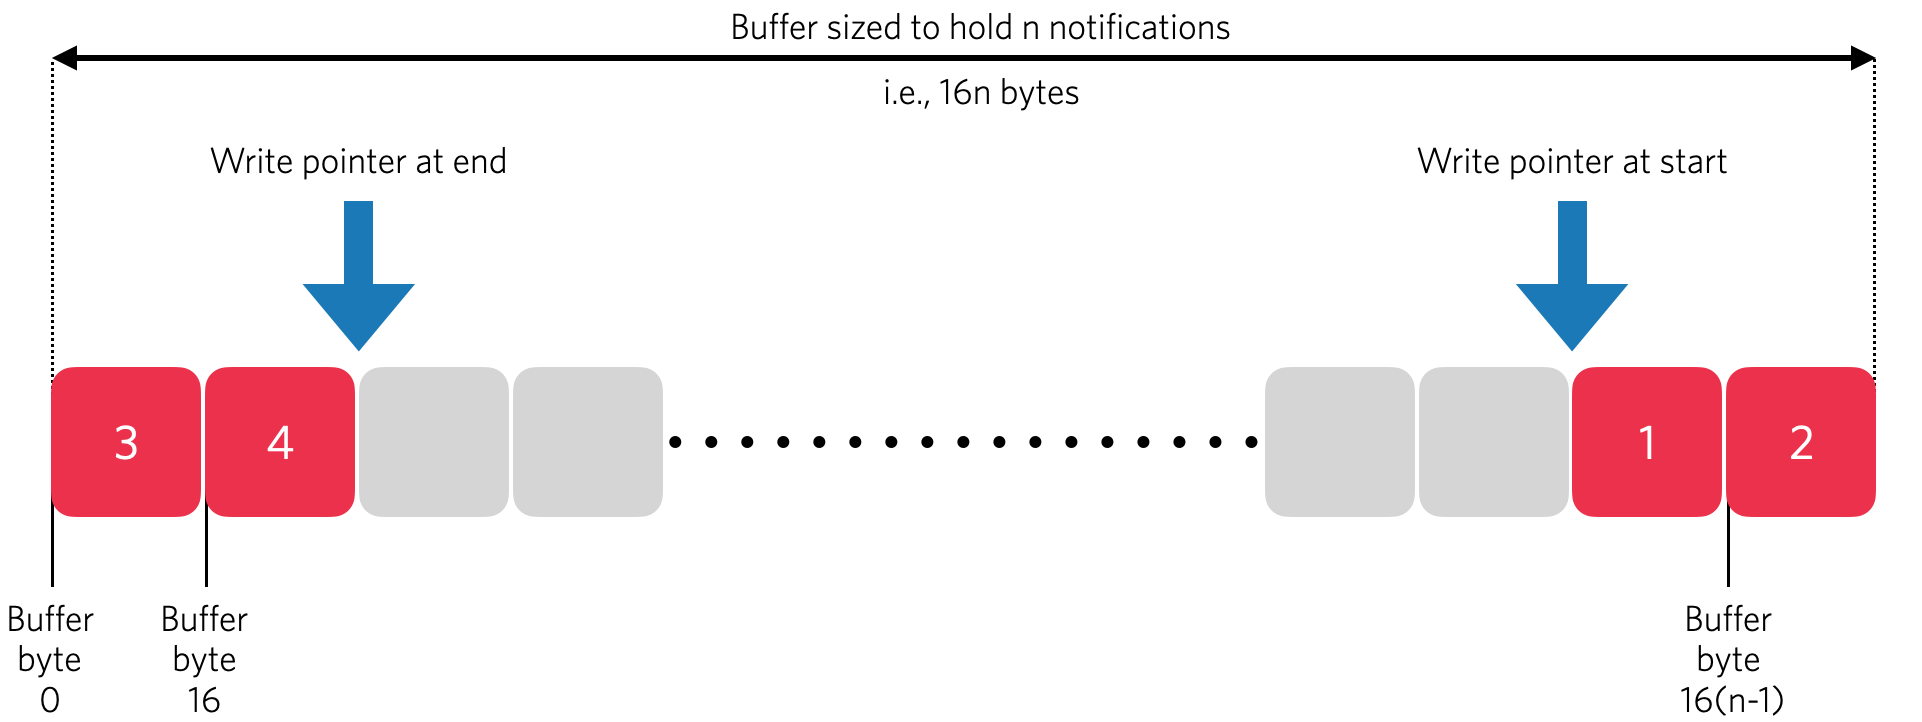 Microvisor's notification buffer.